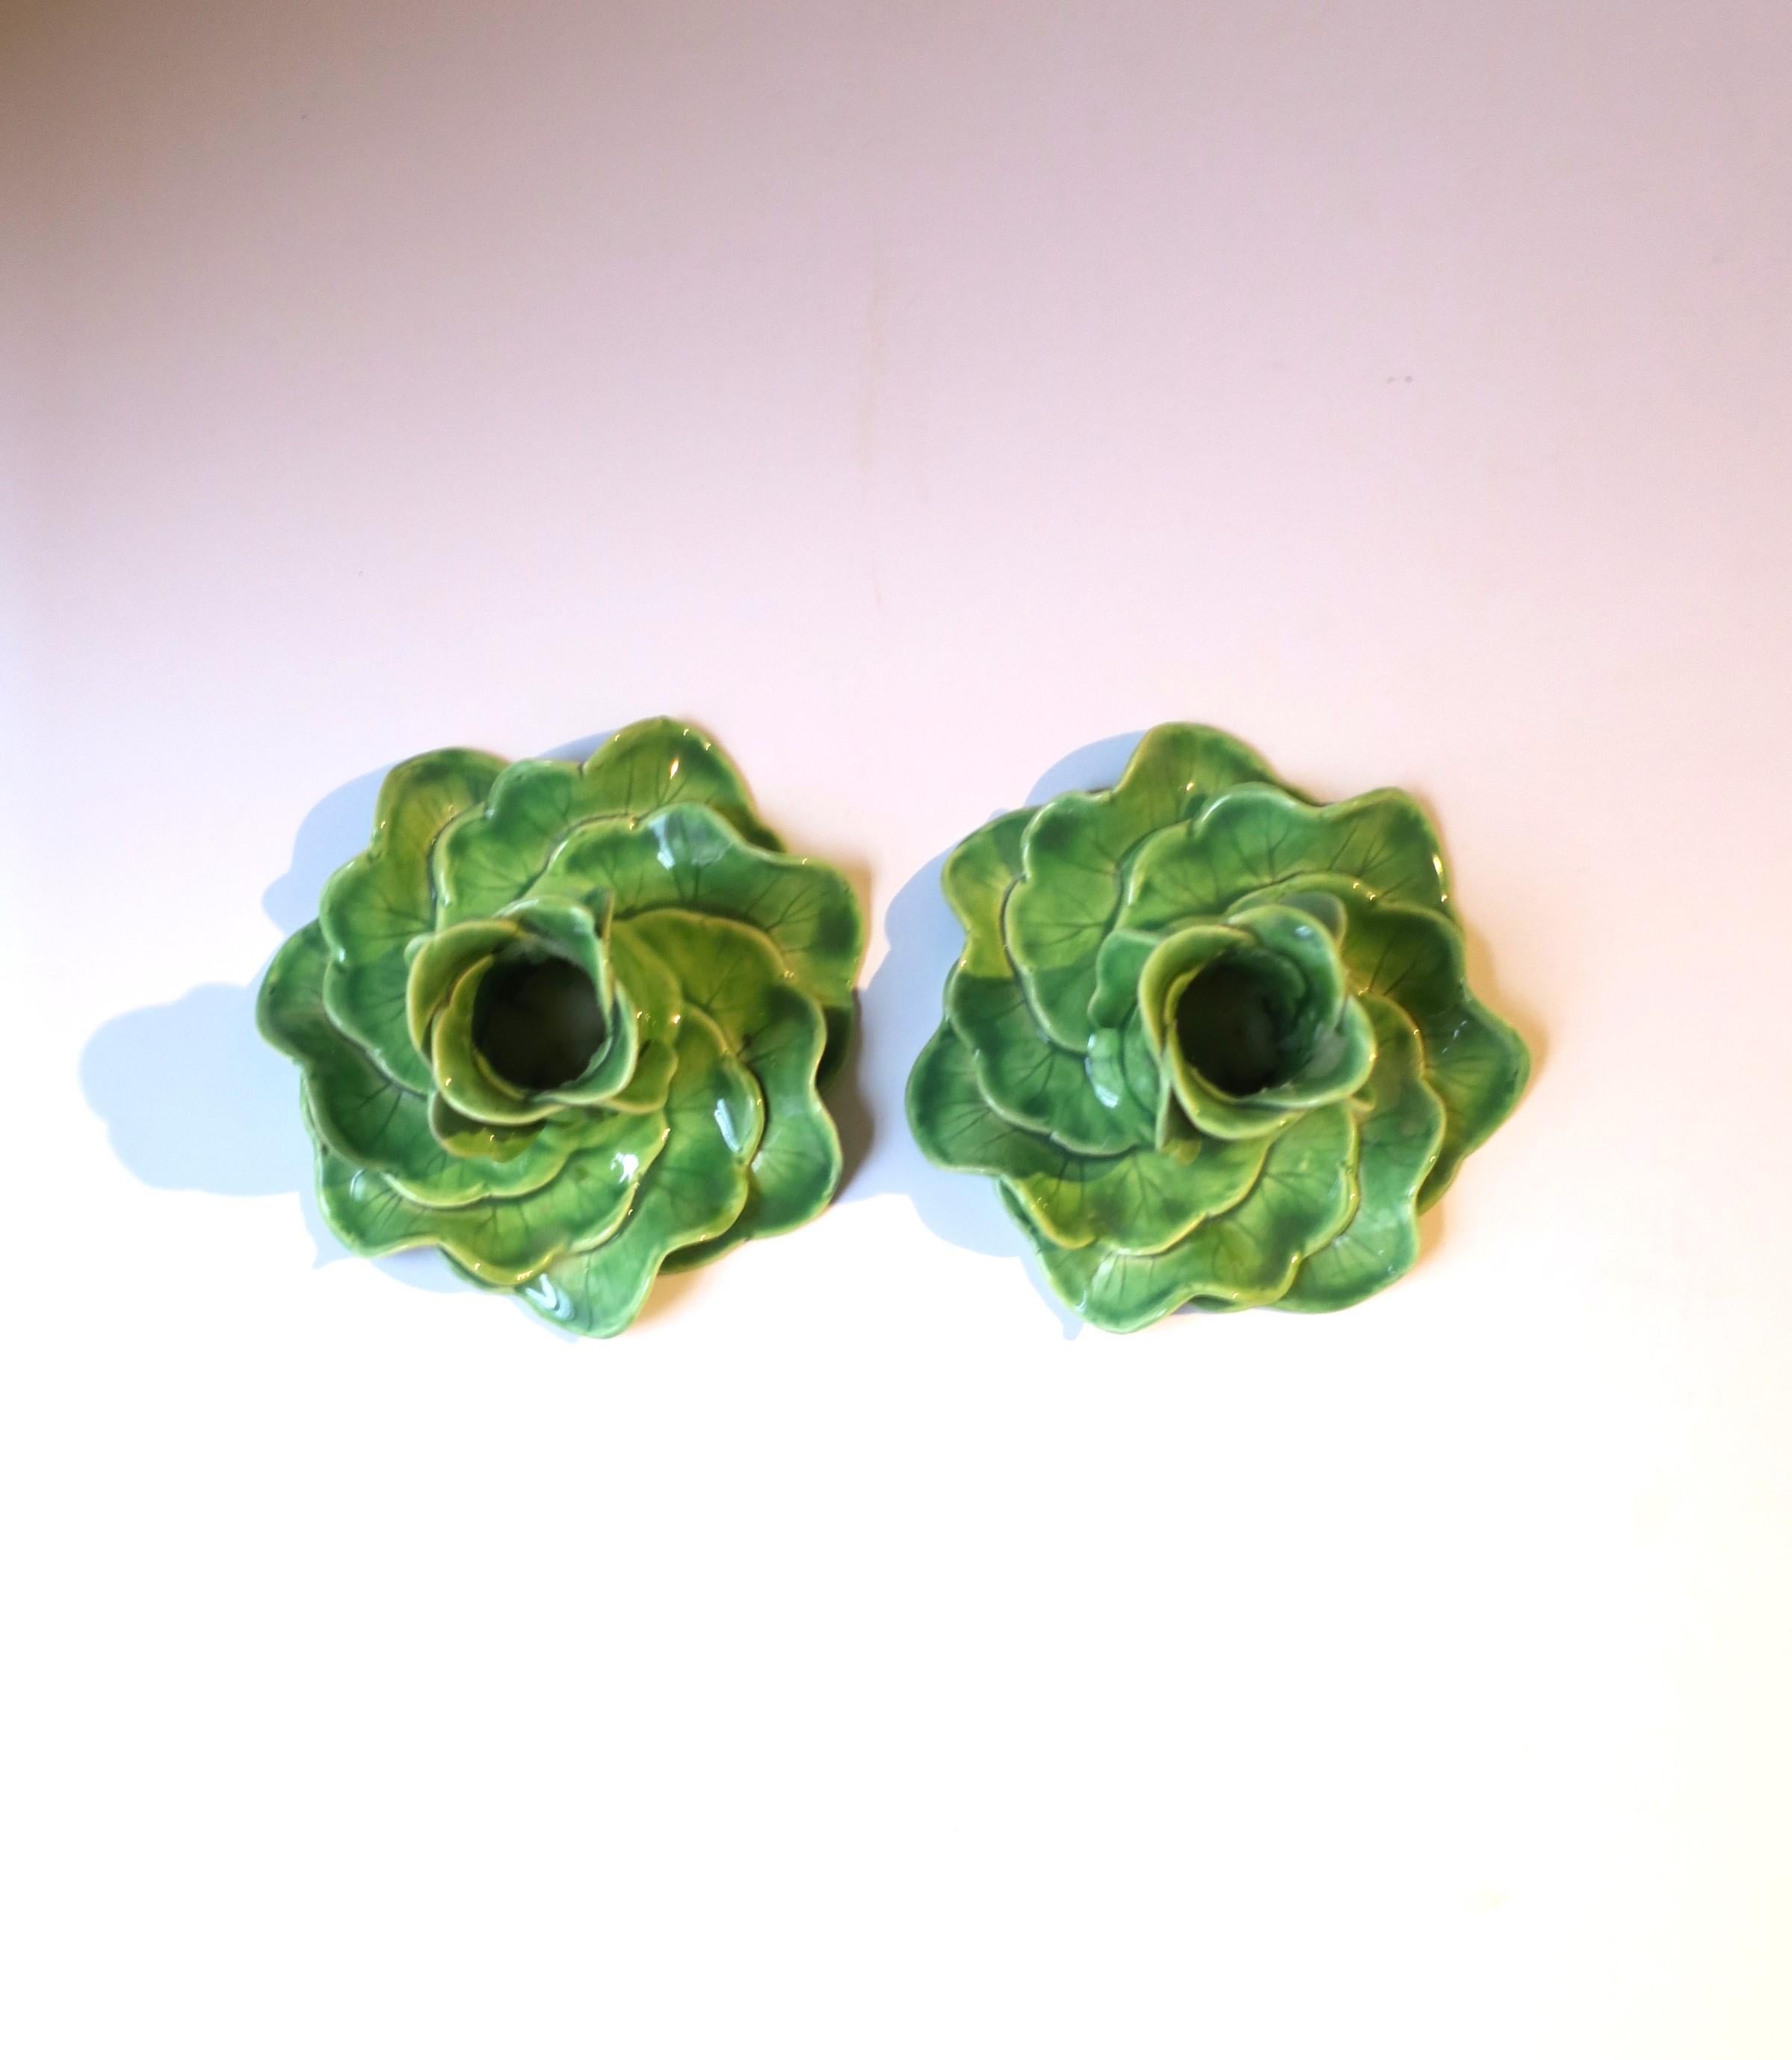 Green Porcelain Lettuce Leaf Candlestick Holders Styled After Dodie Thayer 6